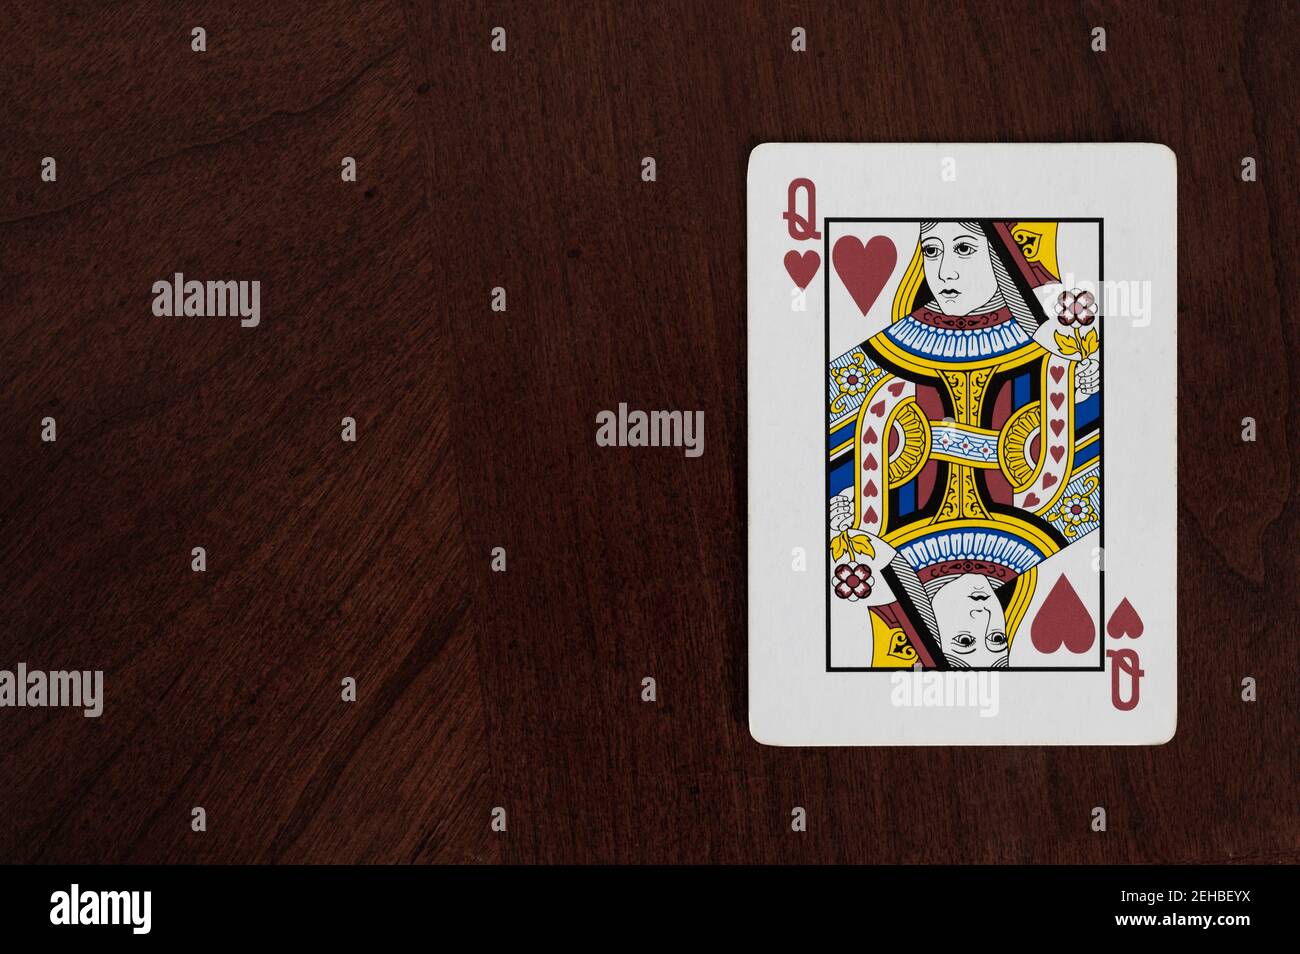 King Of Glory Lan Ling Wang Video Game Queen Of Hearts Desktop Wallpaper Hd  19201080  Wallpapers13com